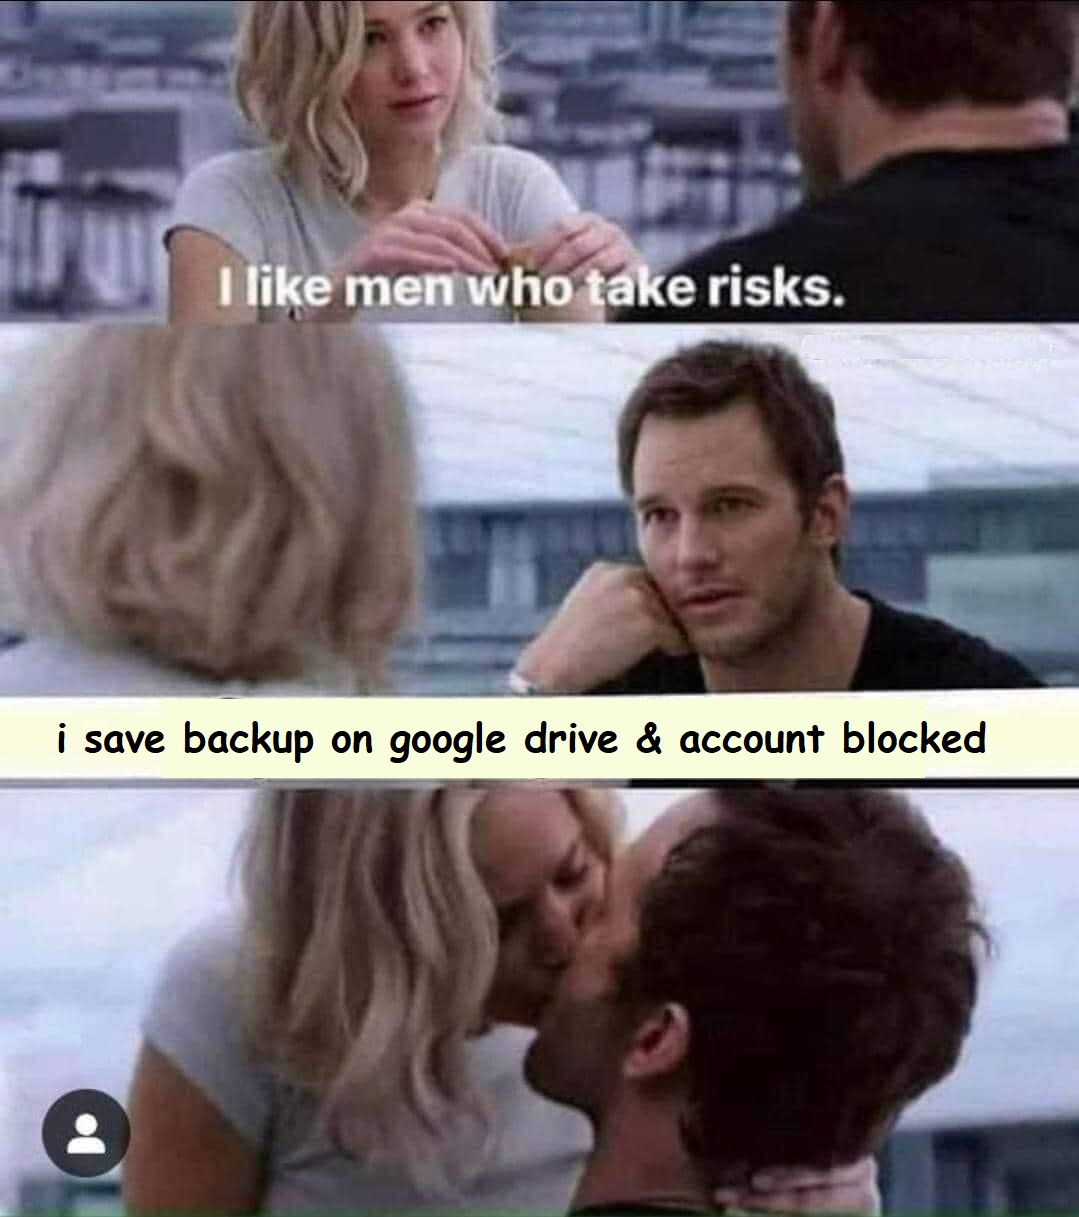 i save backup on google drive & account blocked